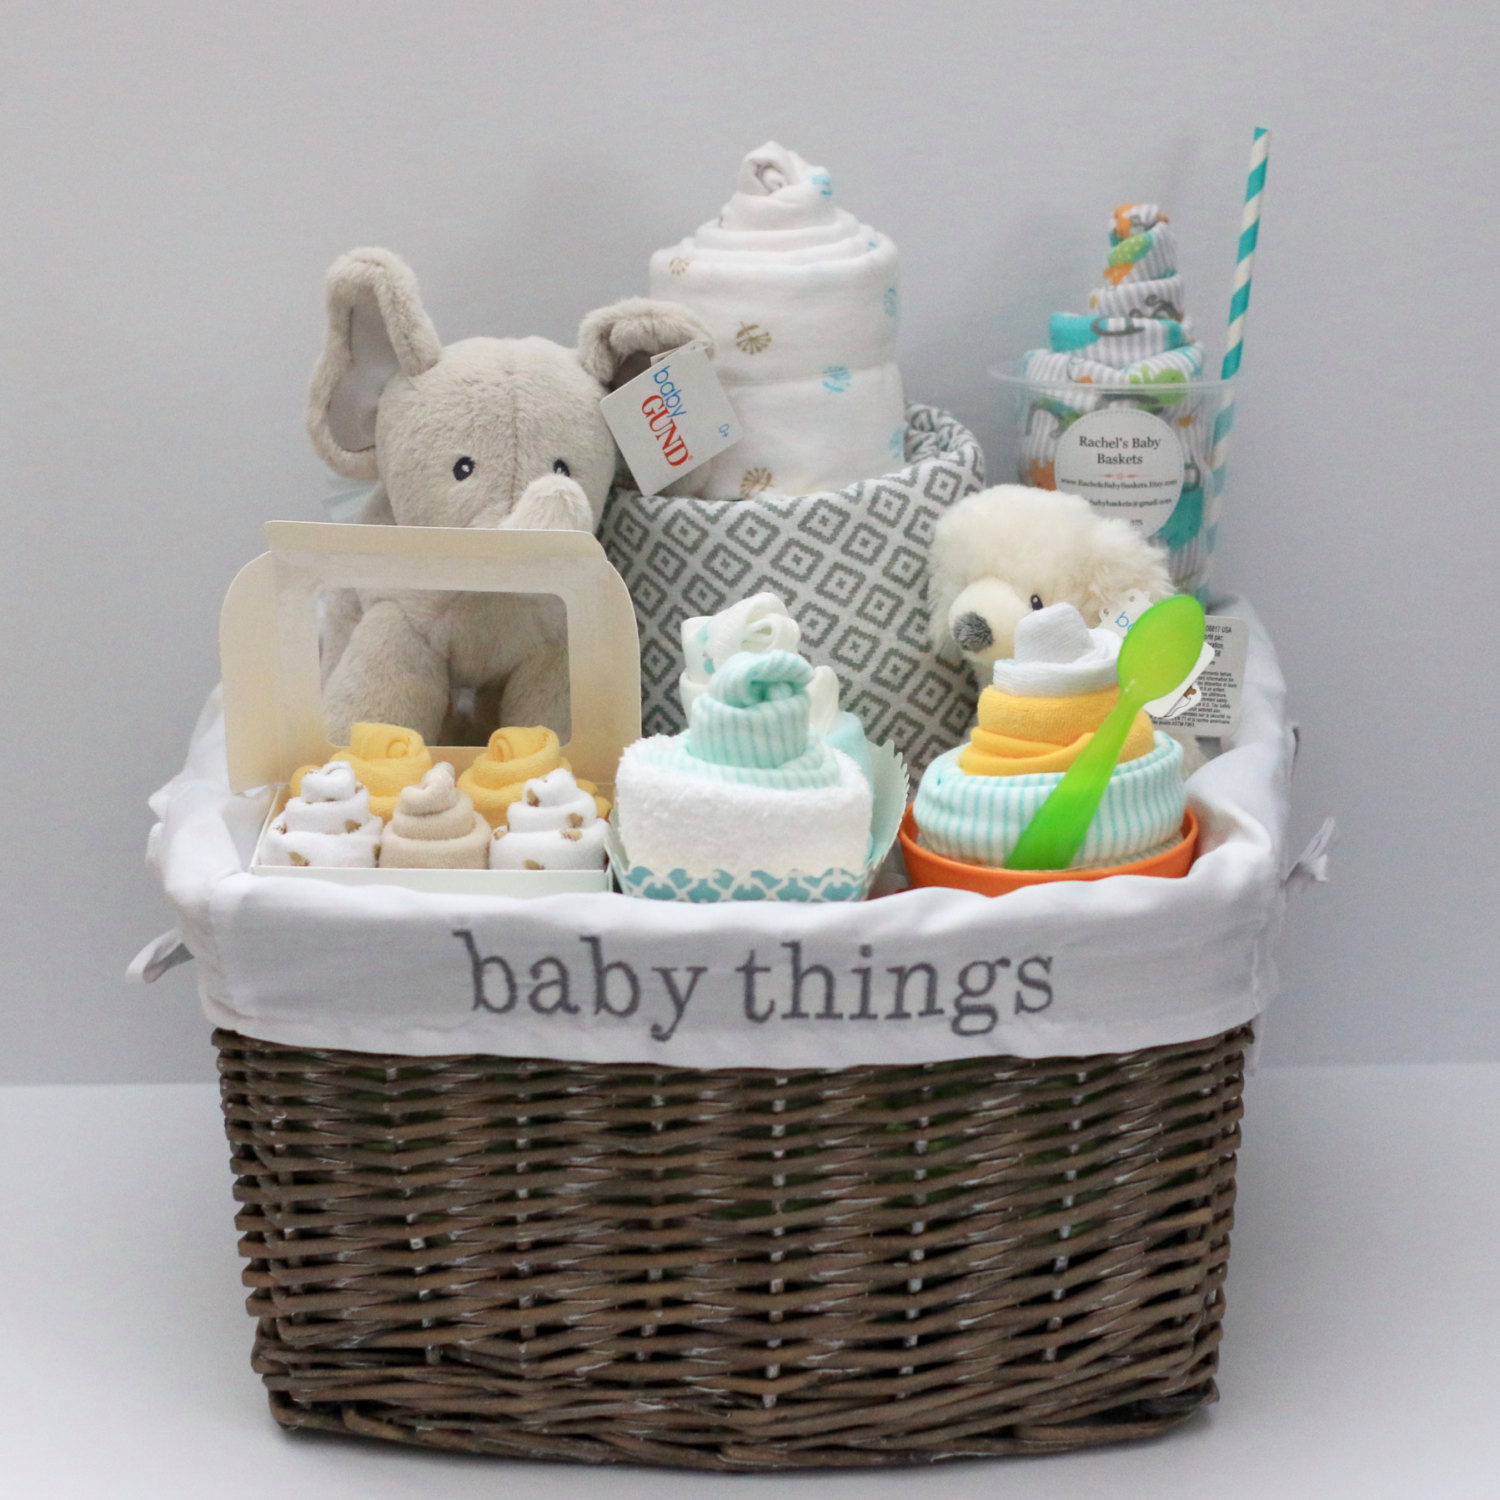 Baby Shower Gift Ideas
 Gender Neutral Baby Gift Basket Baby Shower Gift Unique Baby